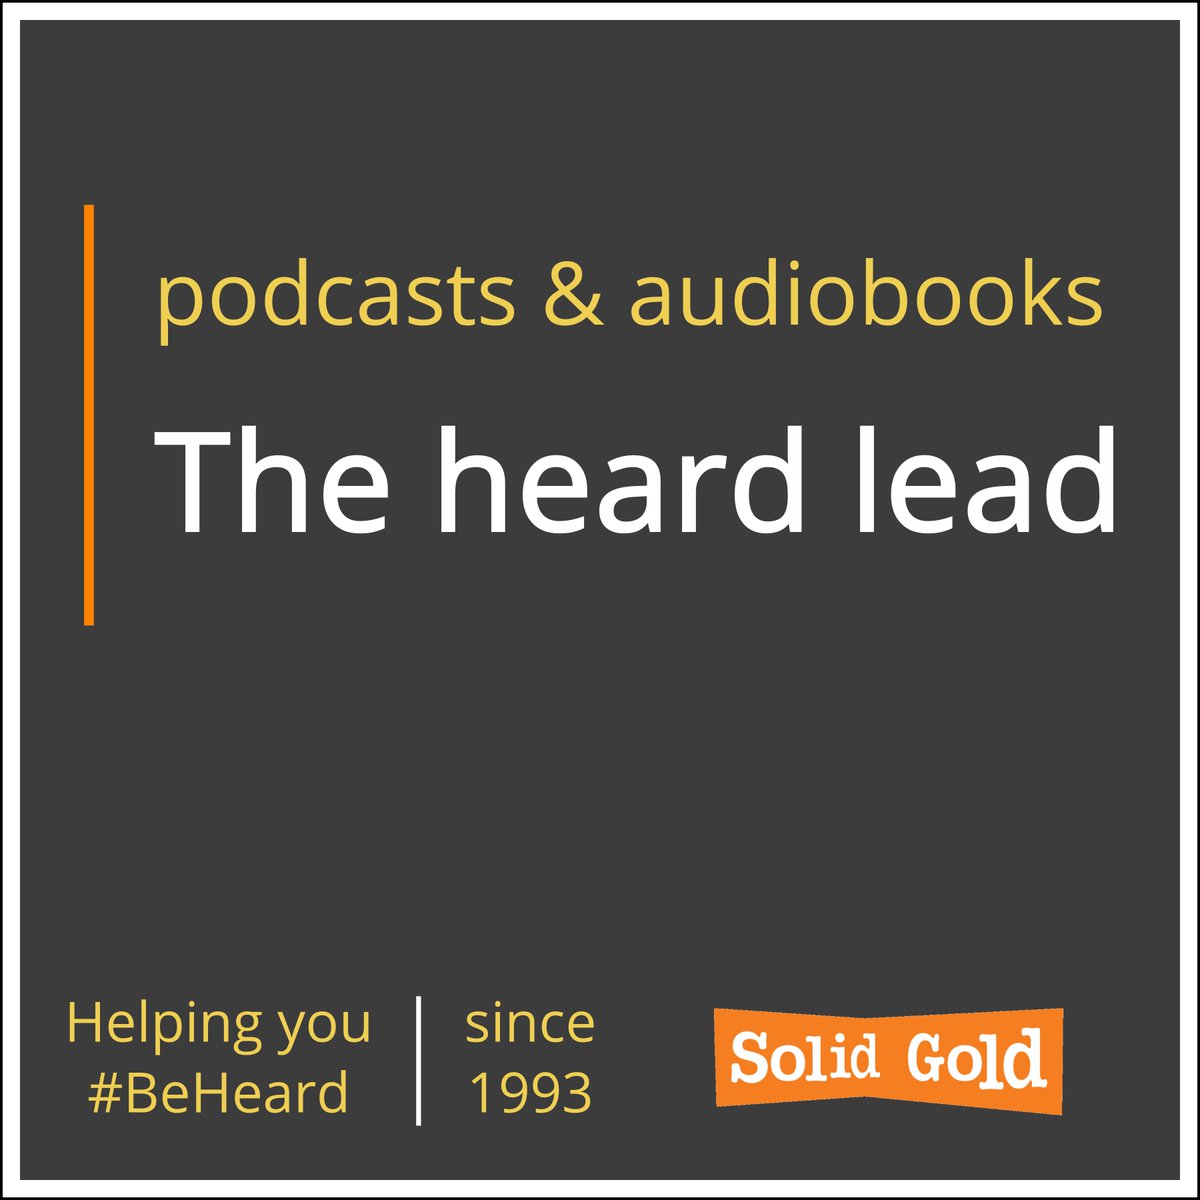 The heard lead.
#podcasts #audiobooks #BeHeard